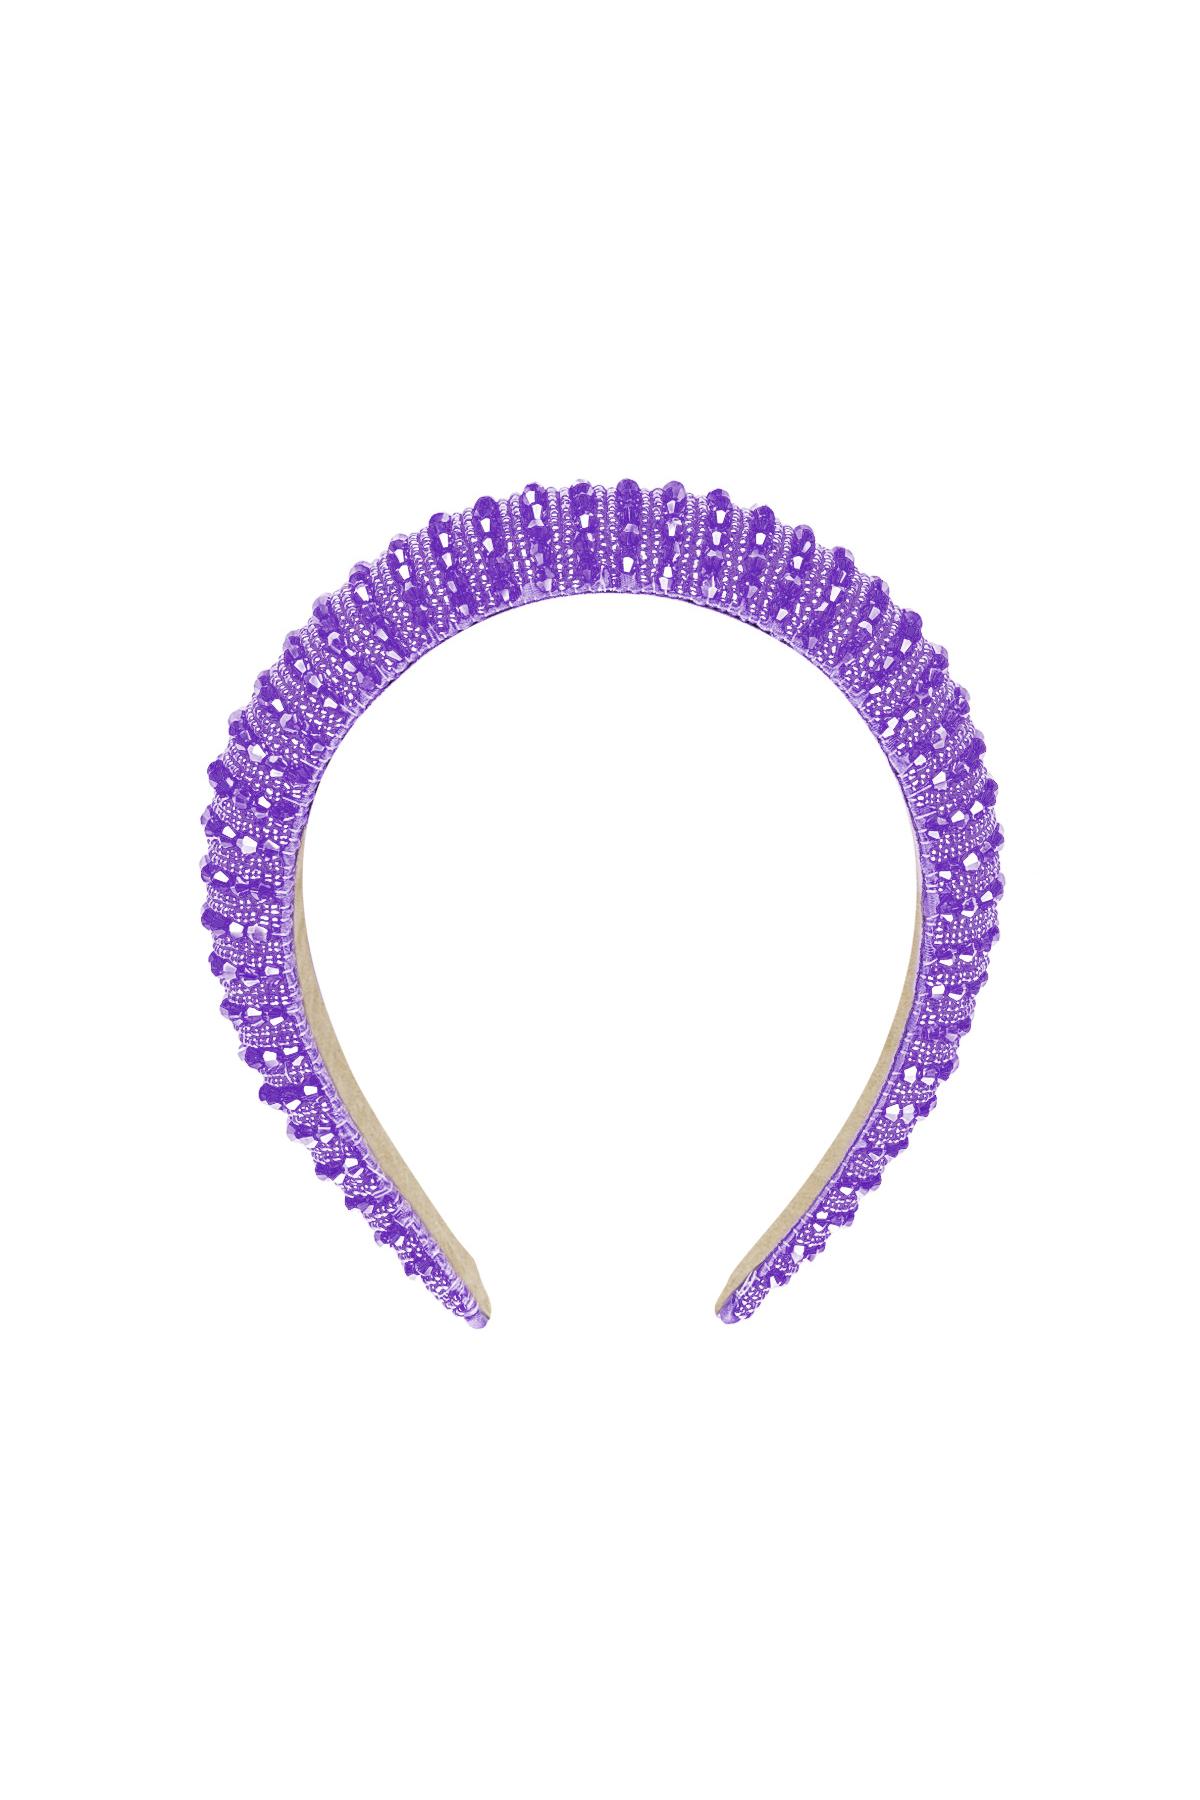 Saç bandı taşları renkli Purple Plastic 